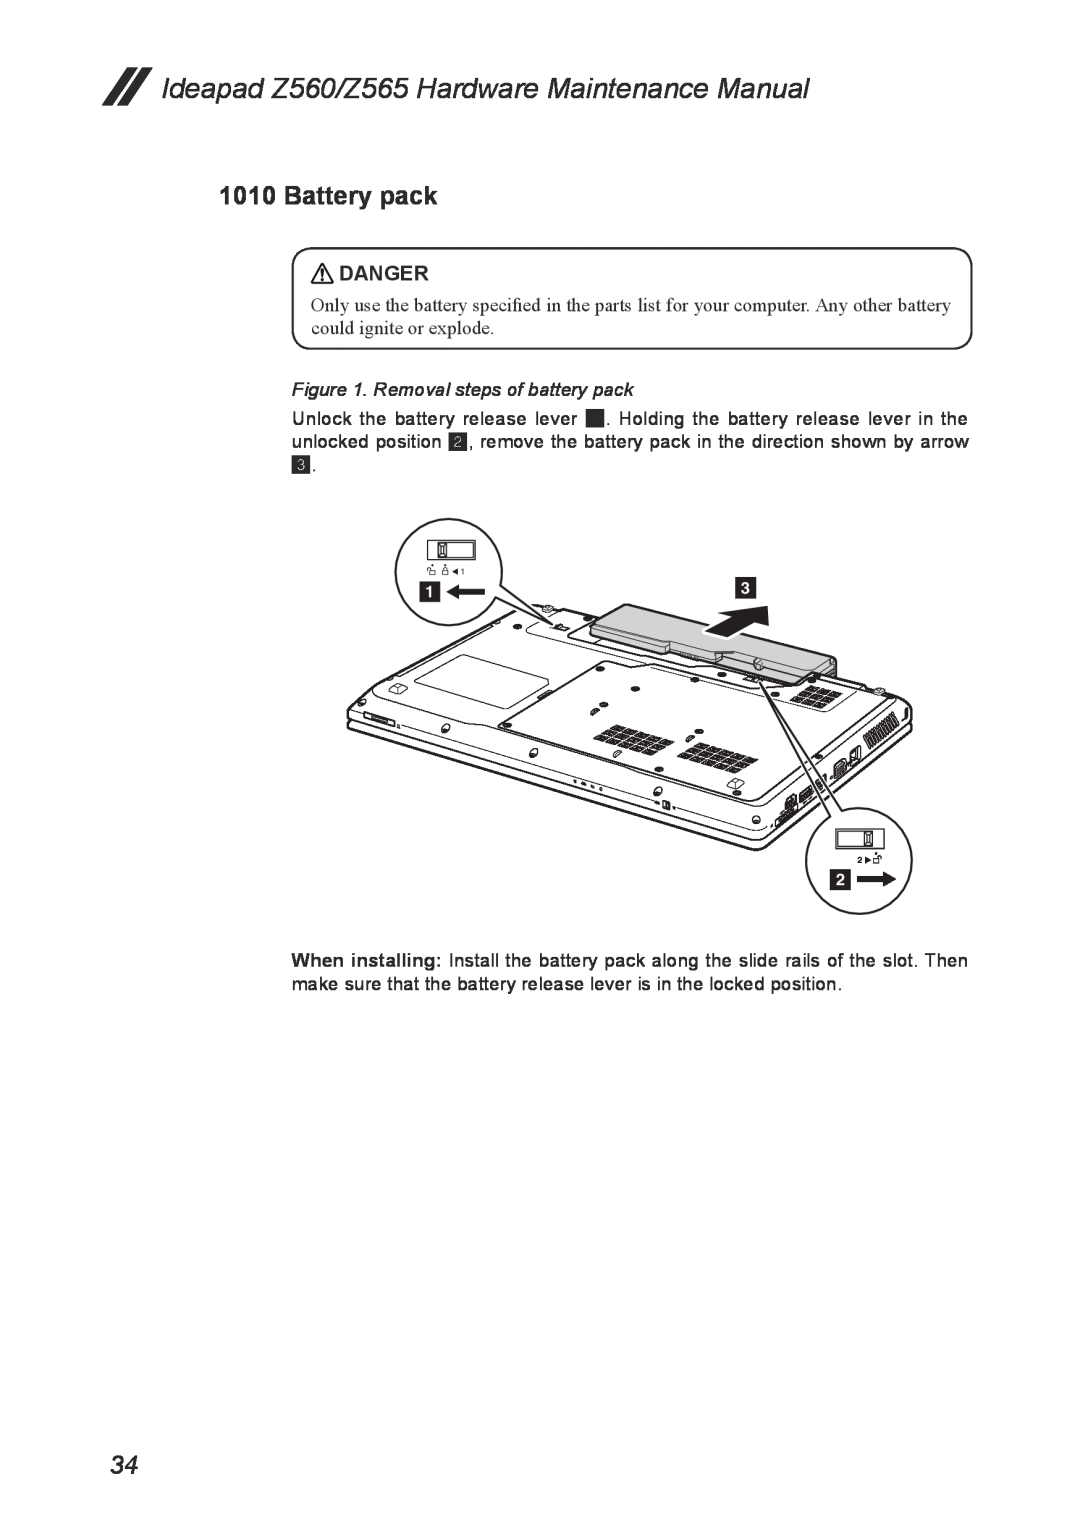 Lenovo manual Battery pack, Removal steps of battery pack, Ideapad Z560/Z565 Hardware Maintenance Manual, Danger 